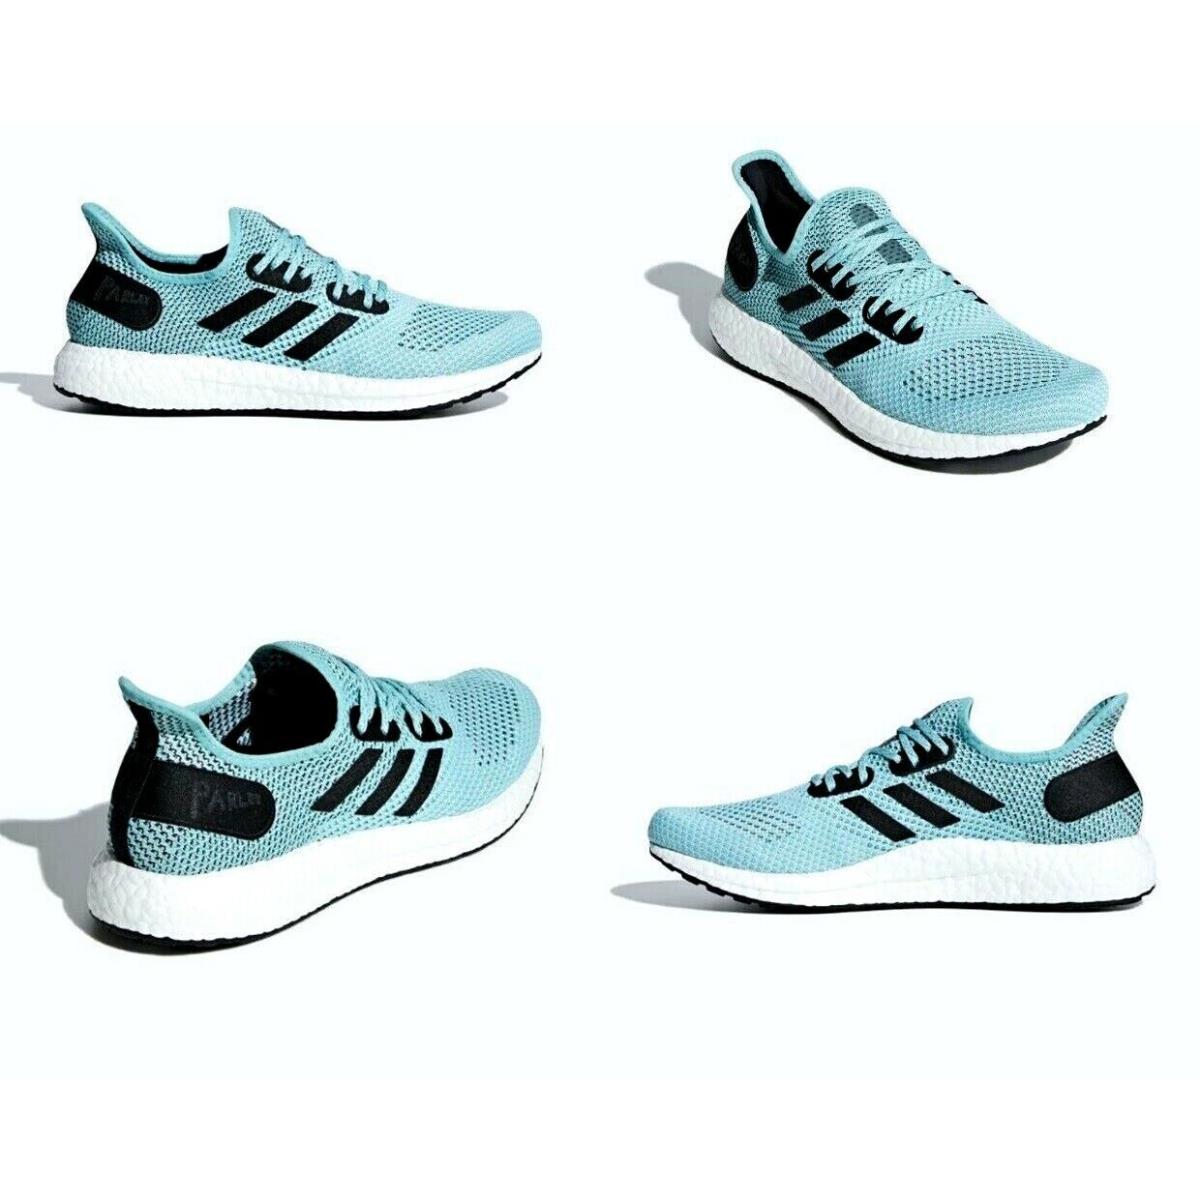 Adidas Speedfactory AM4LA Blue / Black Running Shoes Mens Size 9 AH2239